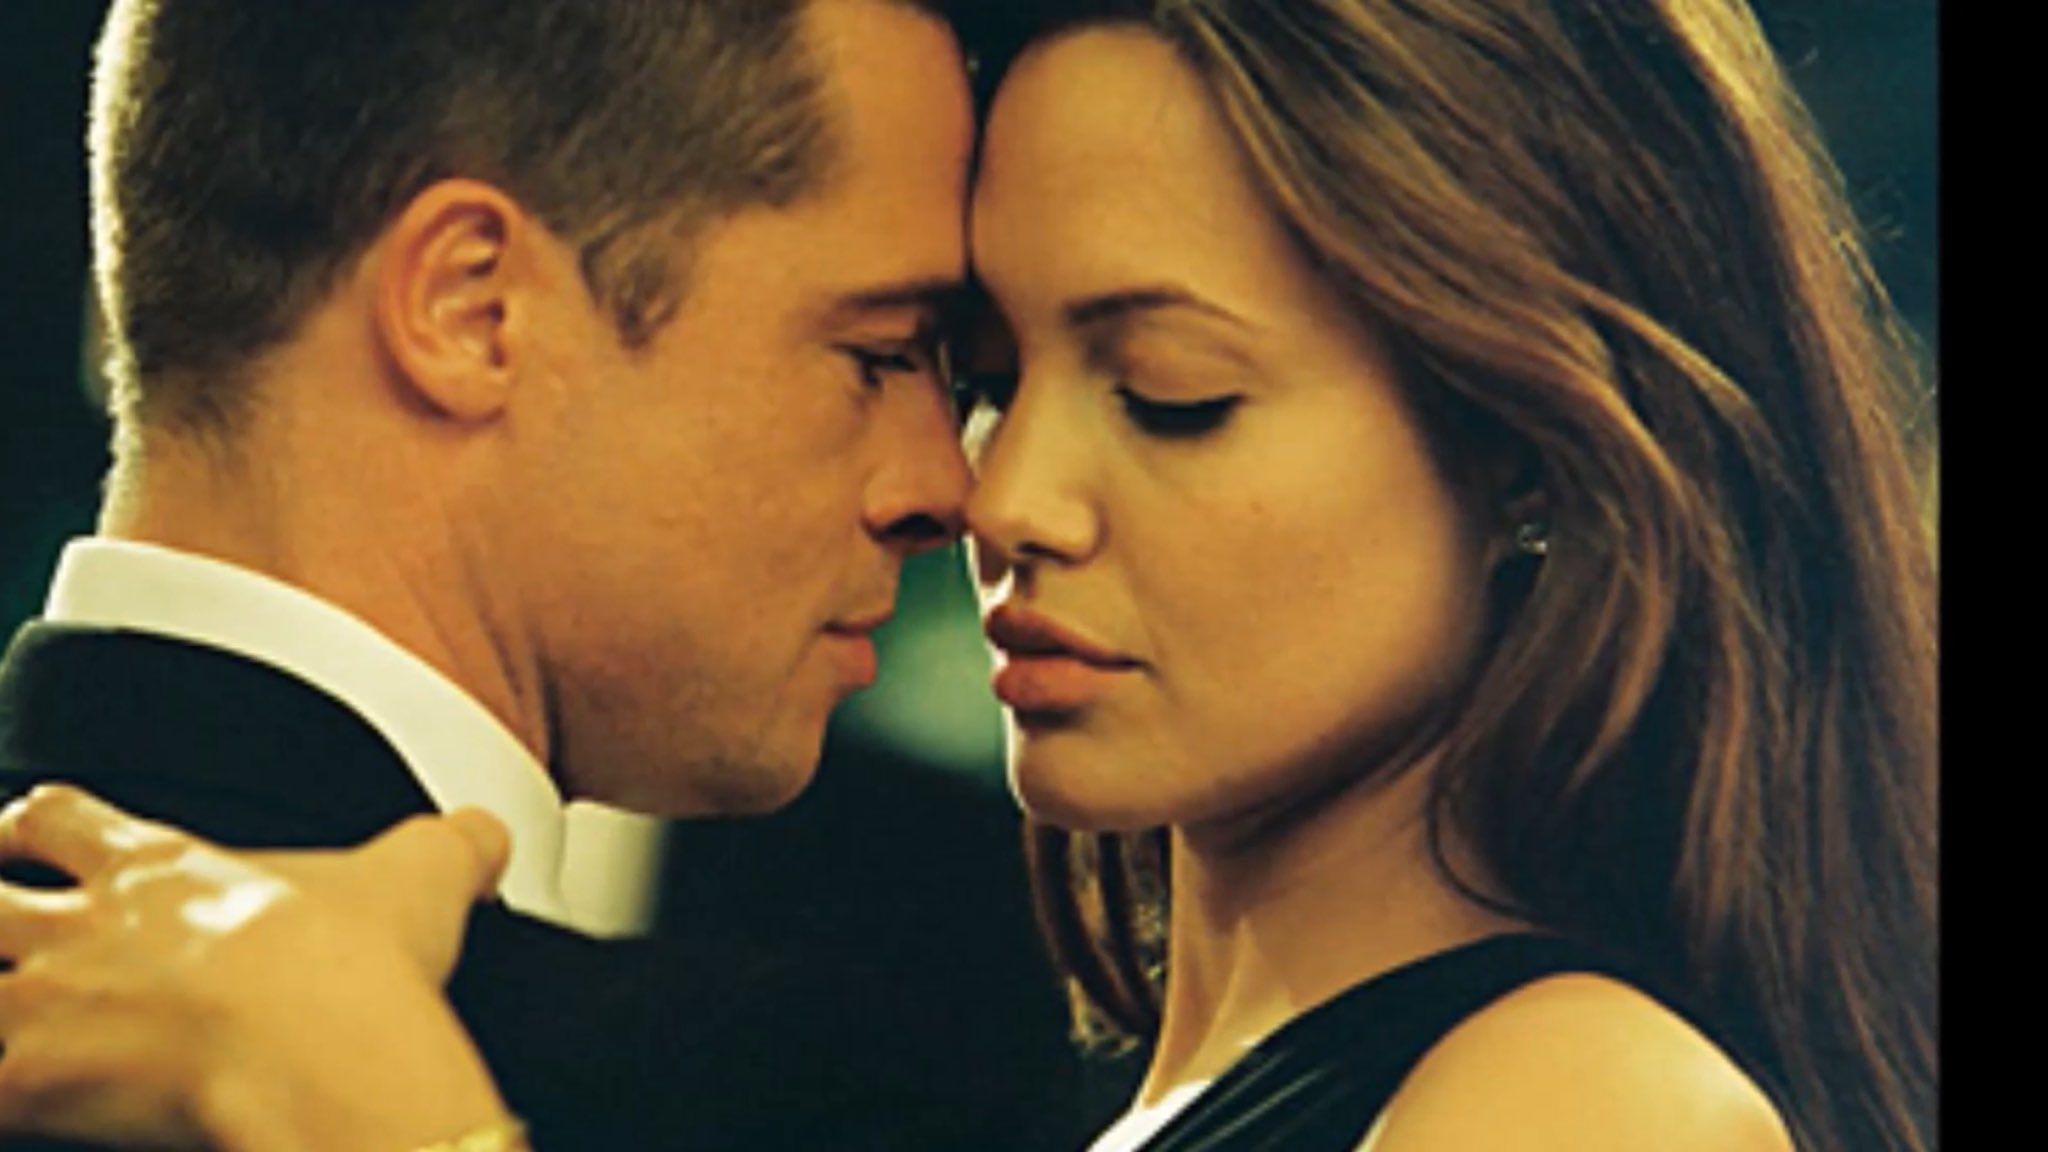 Did Brad Pitt assault Angelina Jolie?